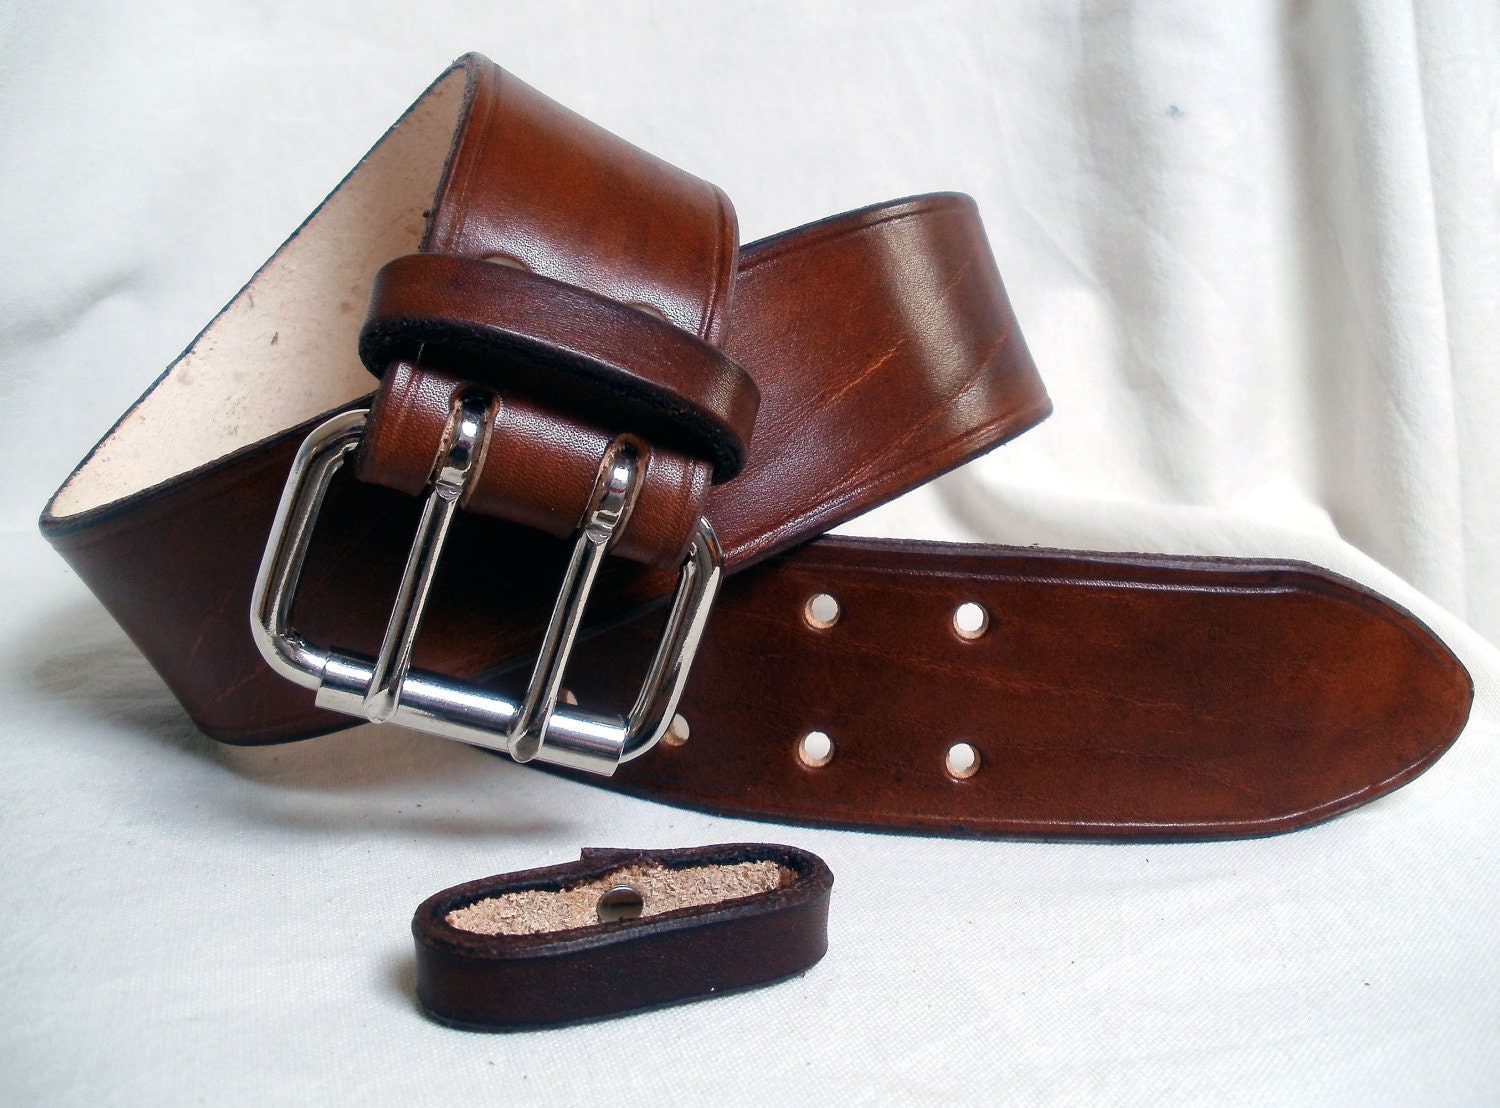 Wide leather belt for men or women | Mens leather belt brown, Leather ...